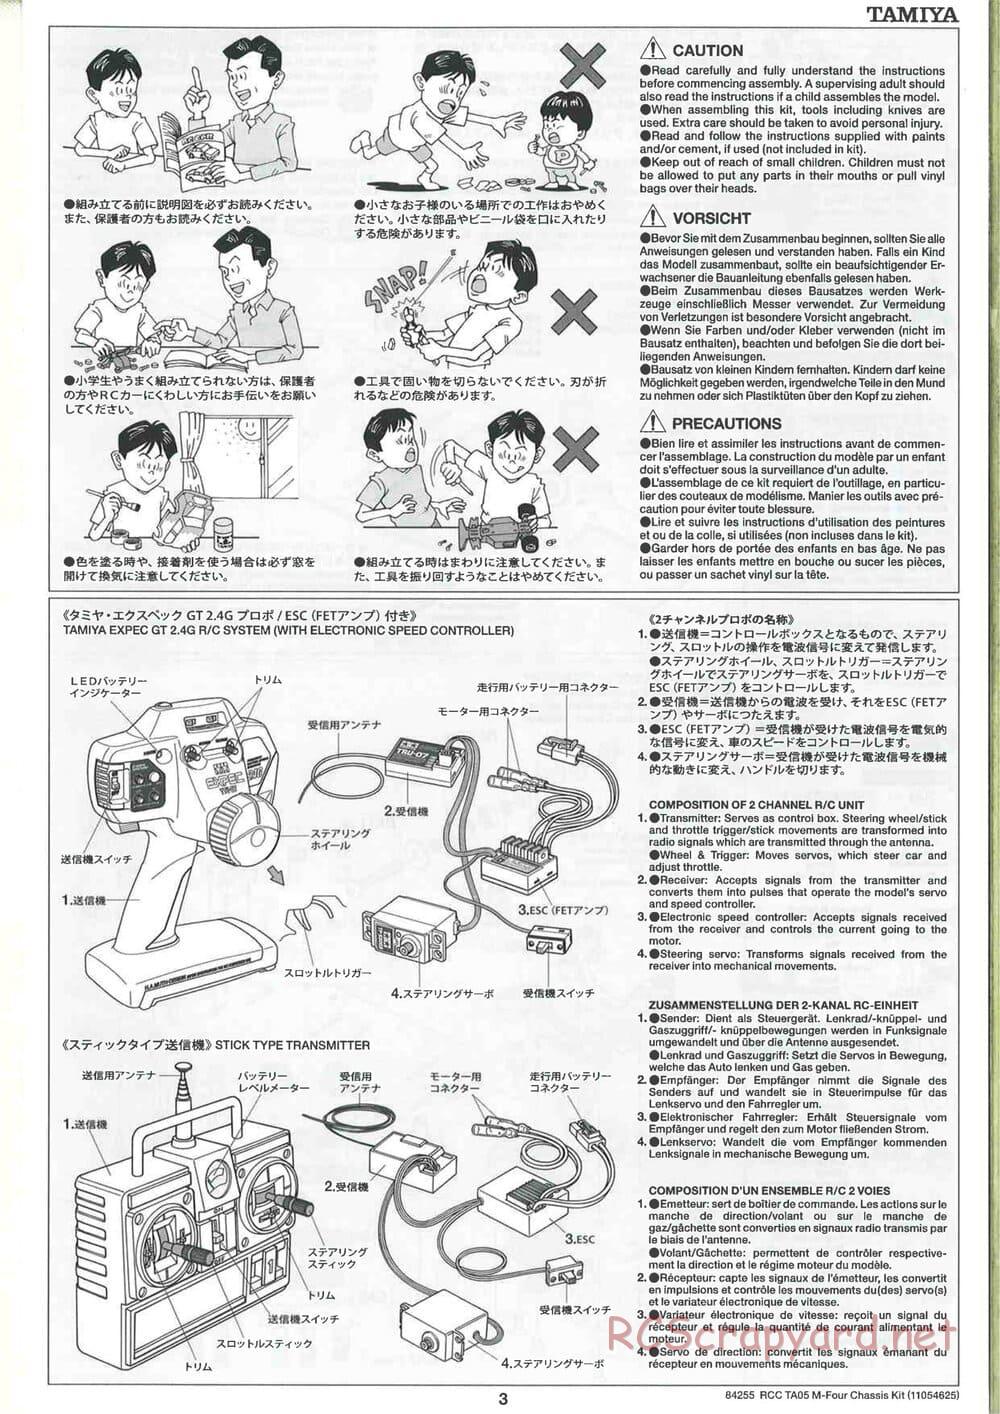 Tamiya - TA05 M-Four Chassis - Manual - Page 3